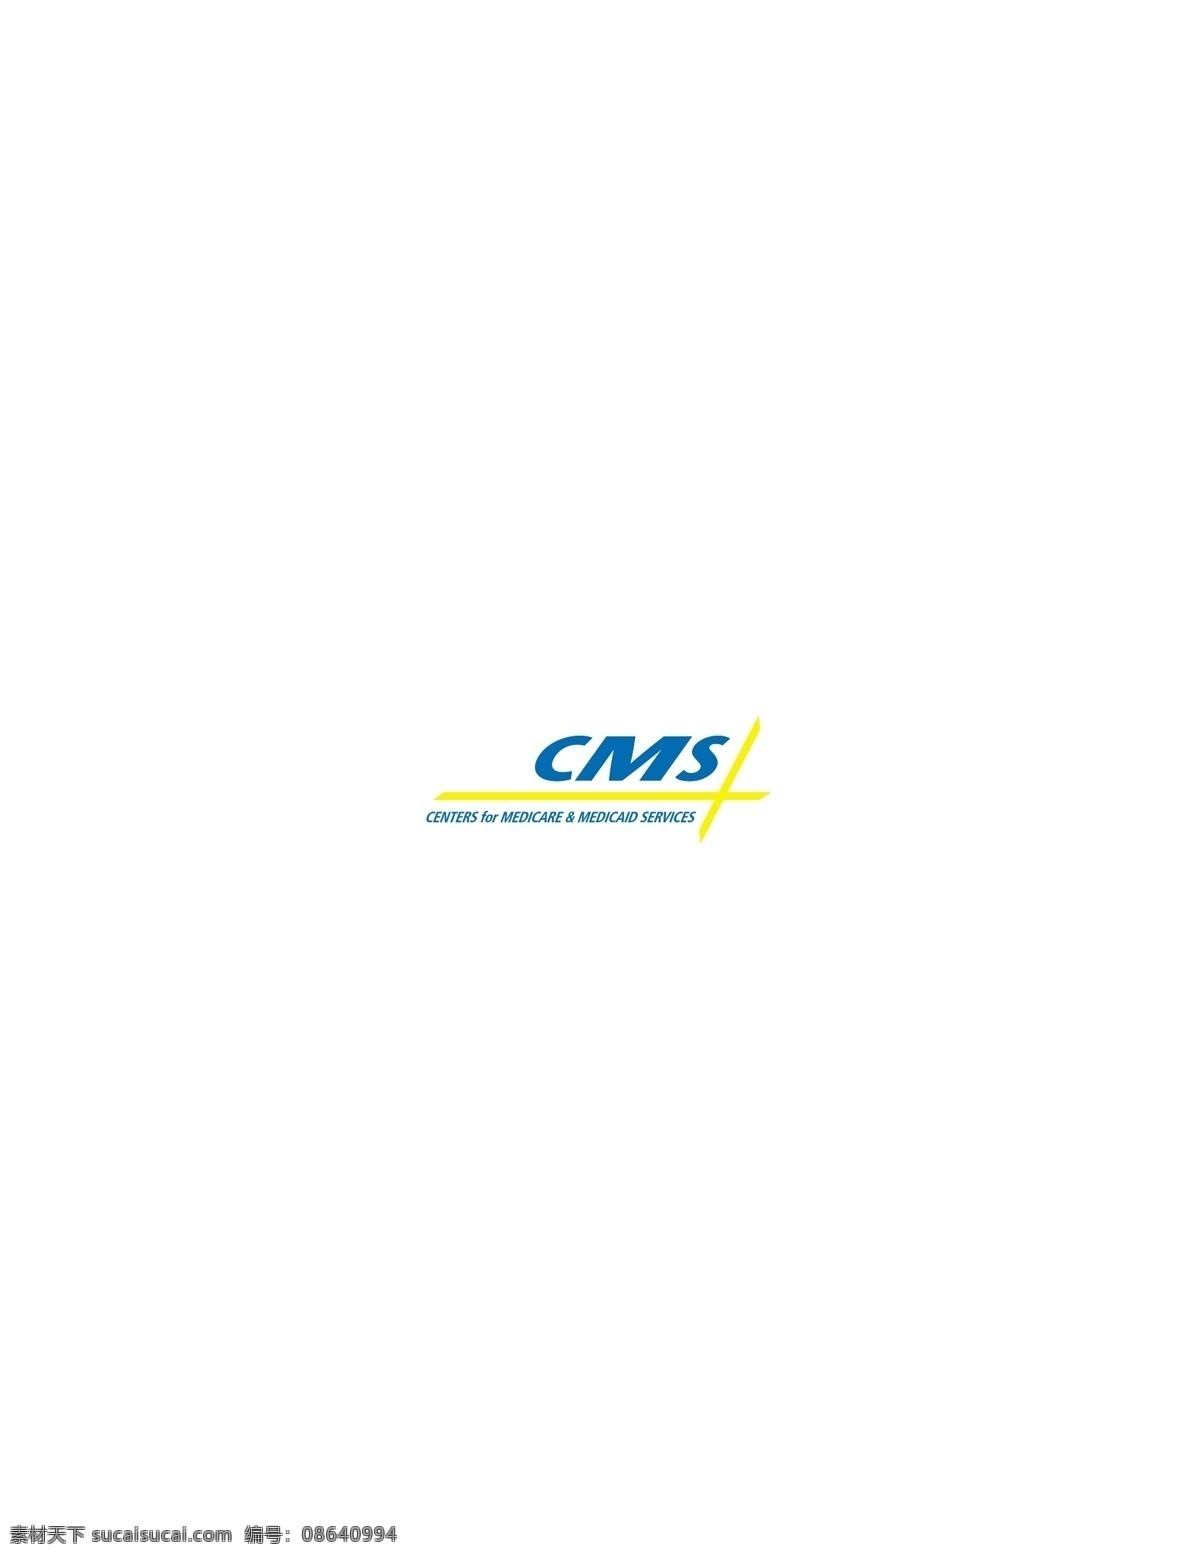 cms logo大全 logo 设计欣赏 商业矢量 矢量下载 医院 标志设计 欣赏 网页矢量 矢量图 其他矢量图